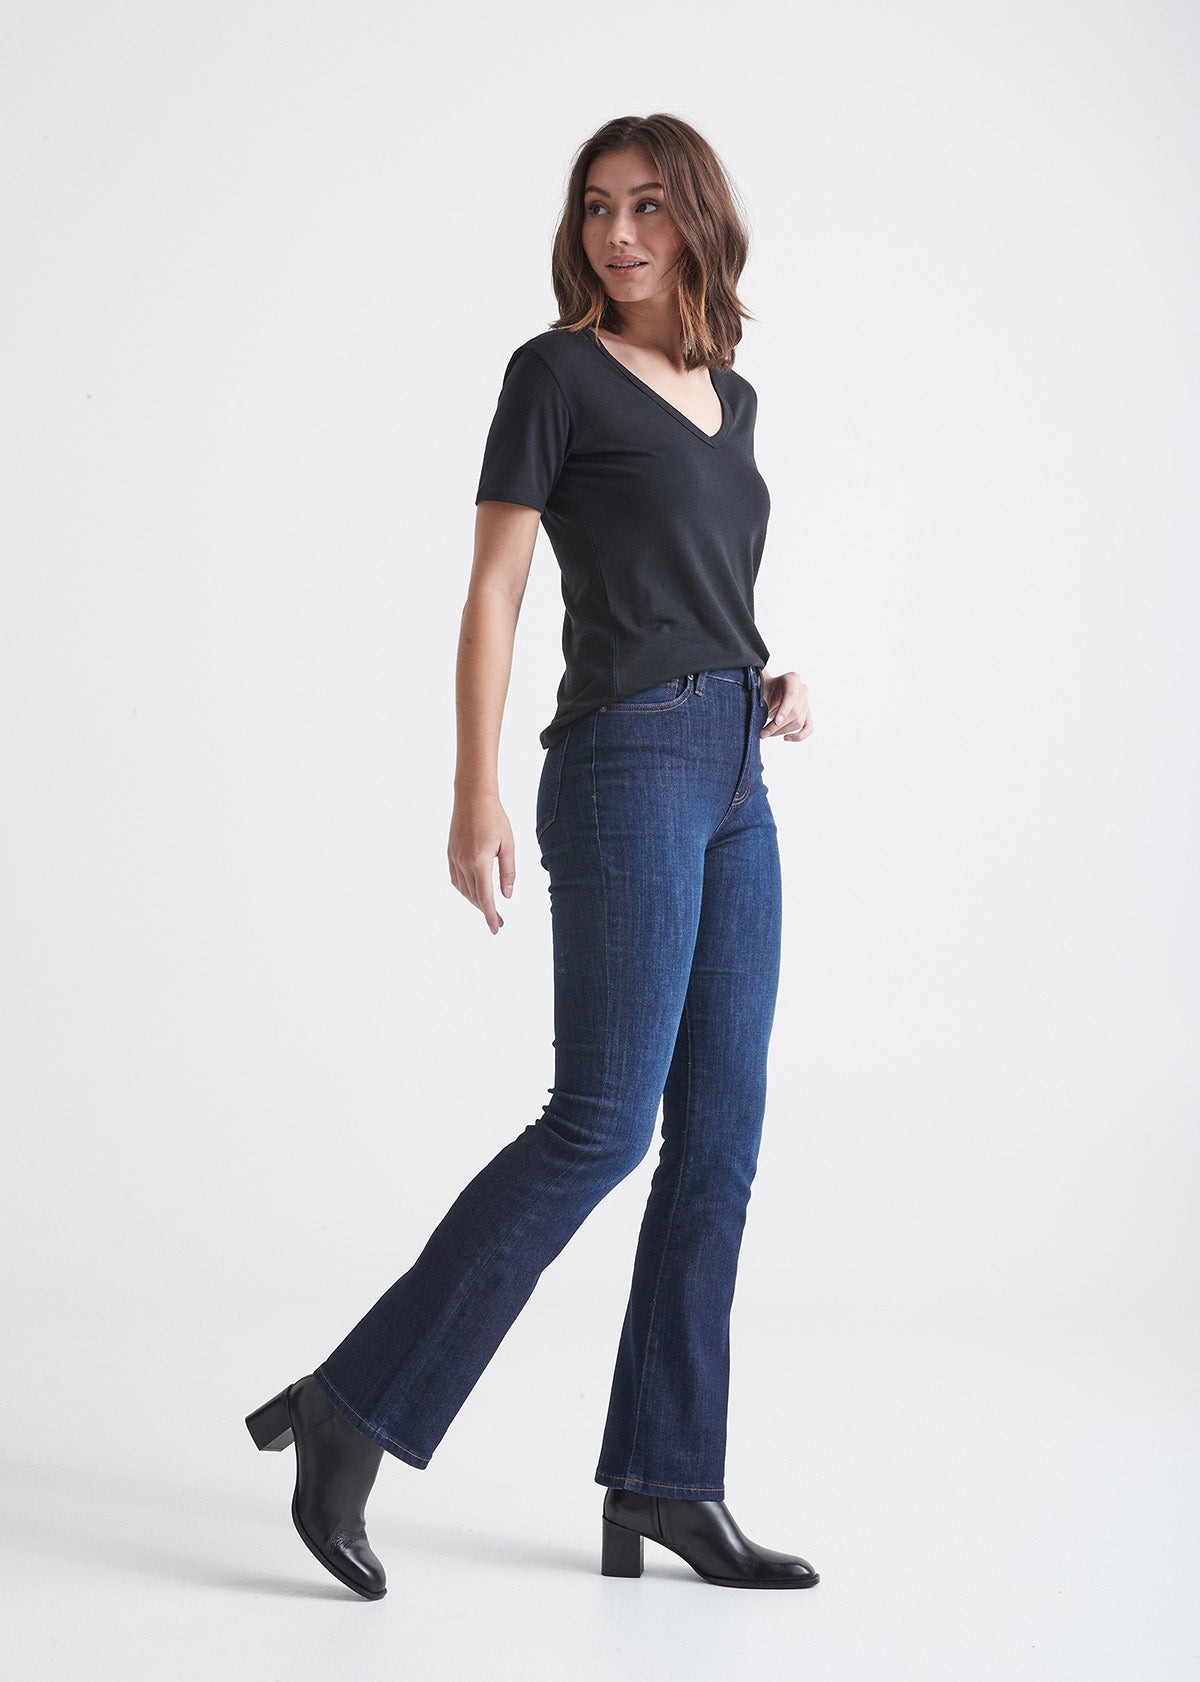 Women's boot cut Jeans low rise Black Bootcut pants Stretch